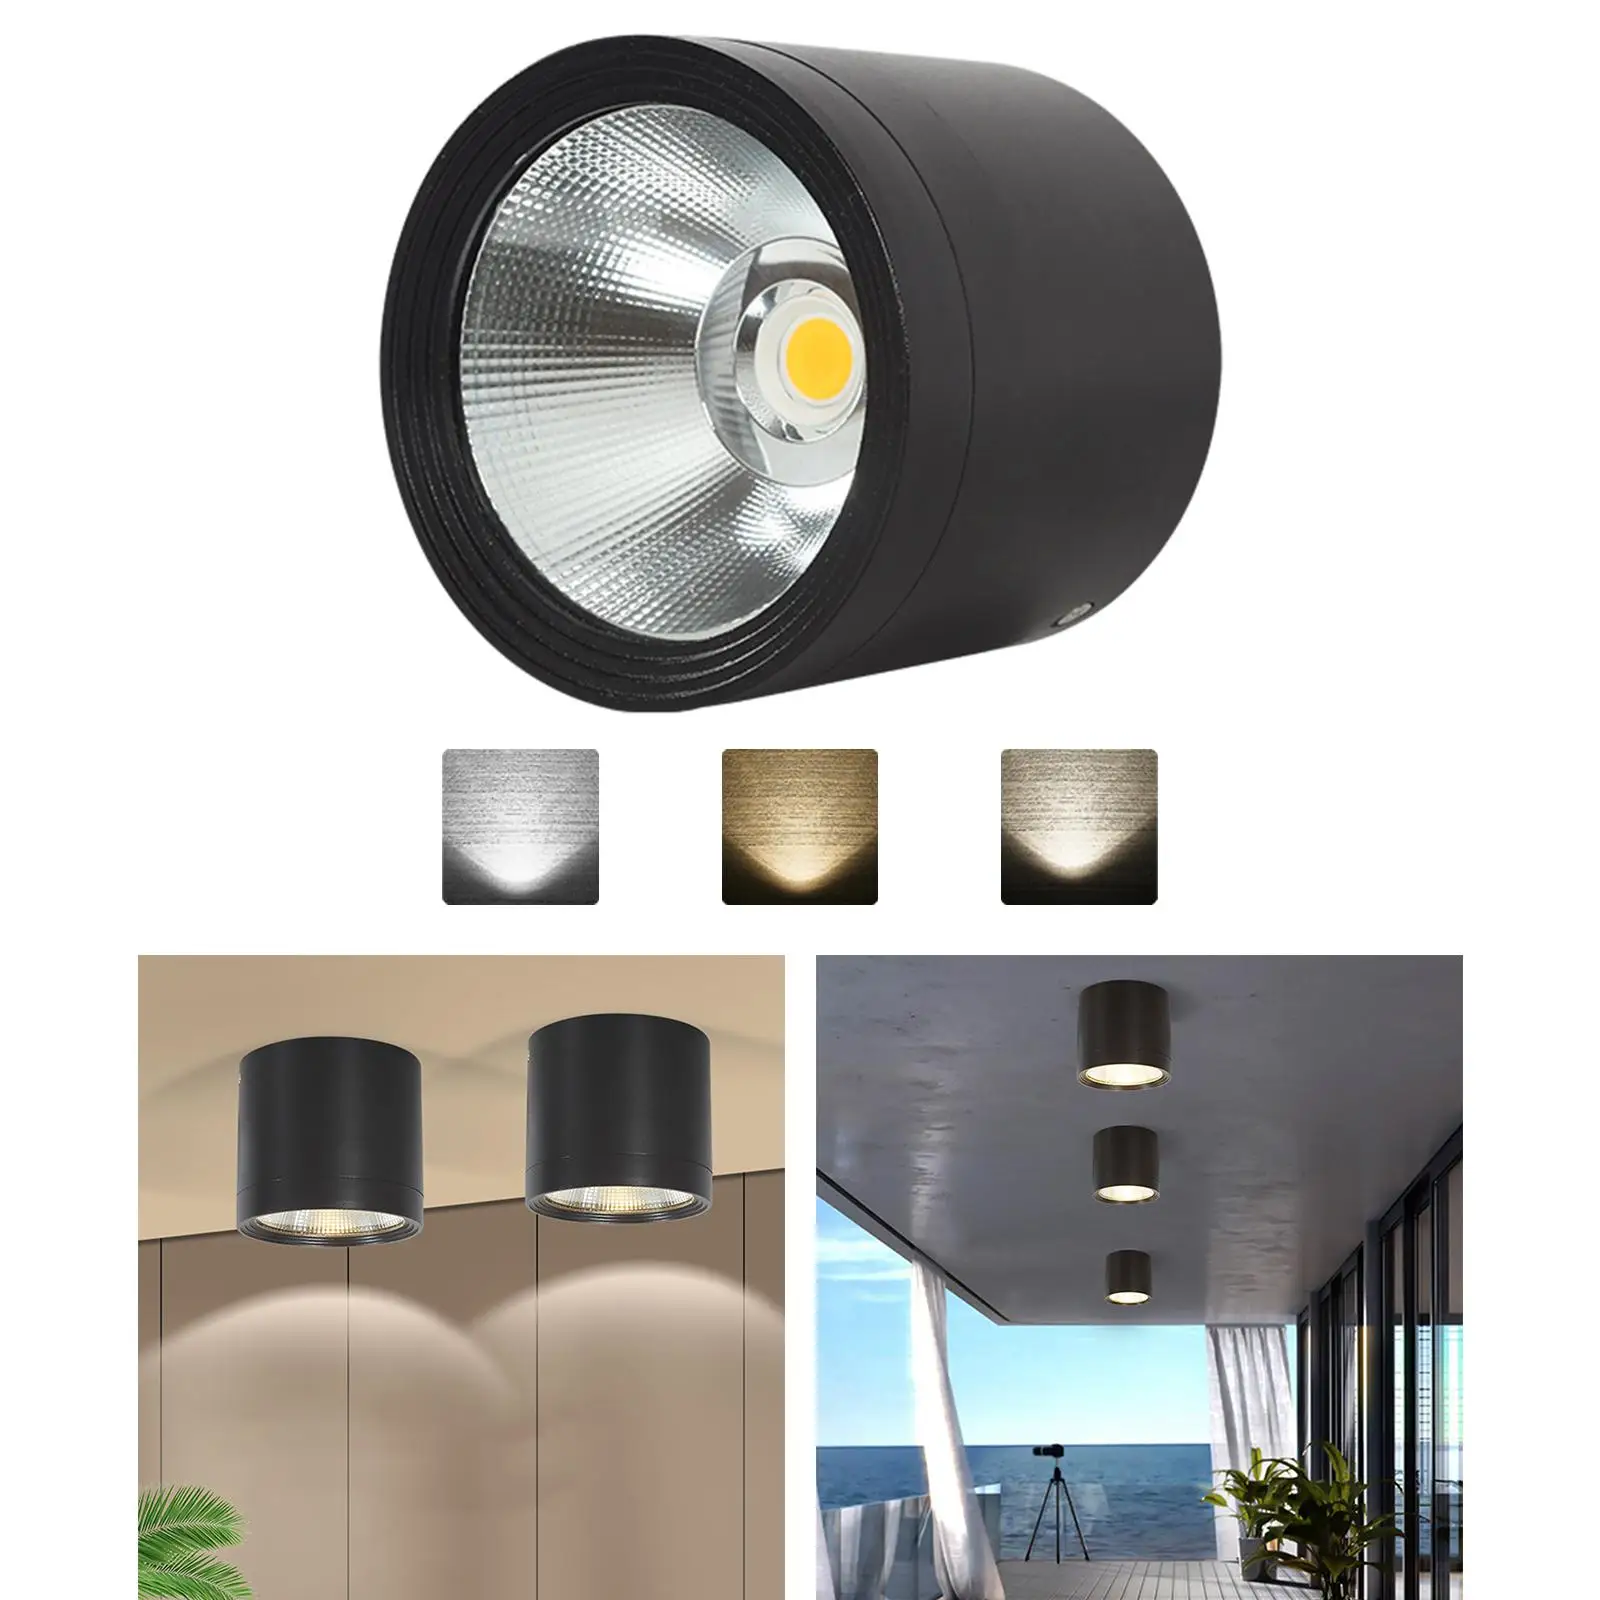 Ceiling Down Light, Spotlights Sturdy Cylinder Lighting Fixture for Bedroom Bathroom